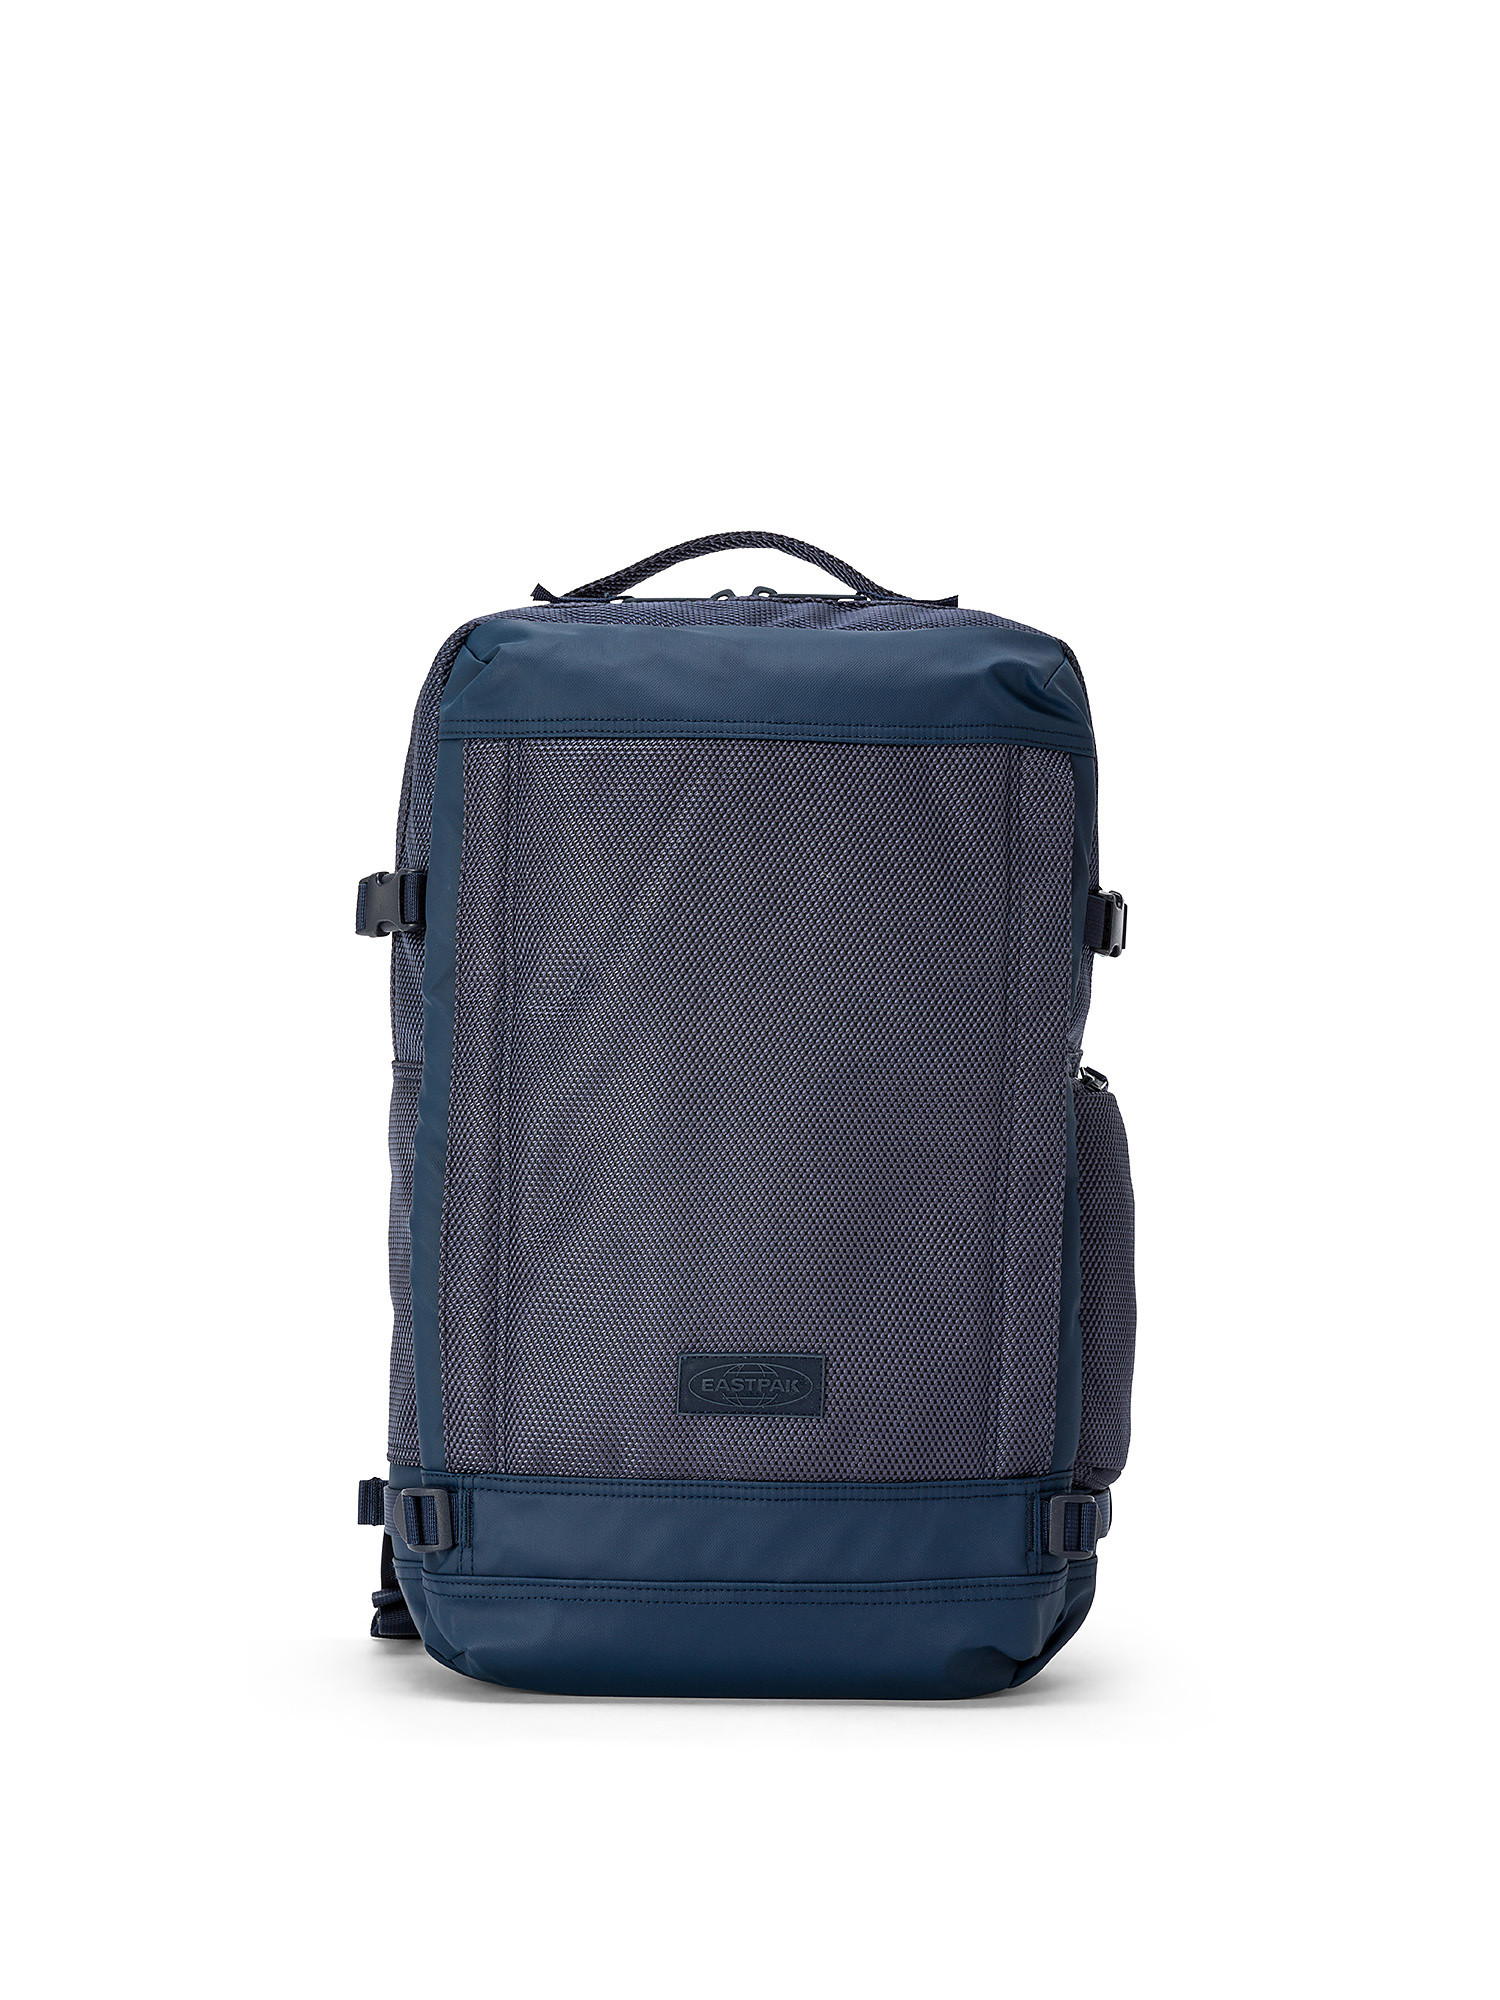 Eastpak - Tecum M Cnnct Marine Backpack, Blue, large image number 0